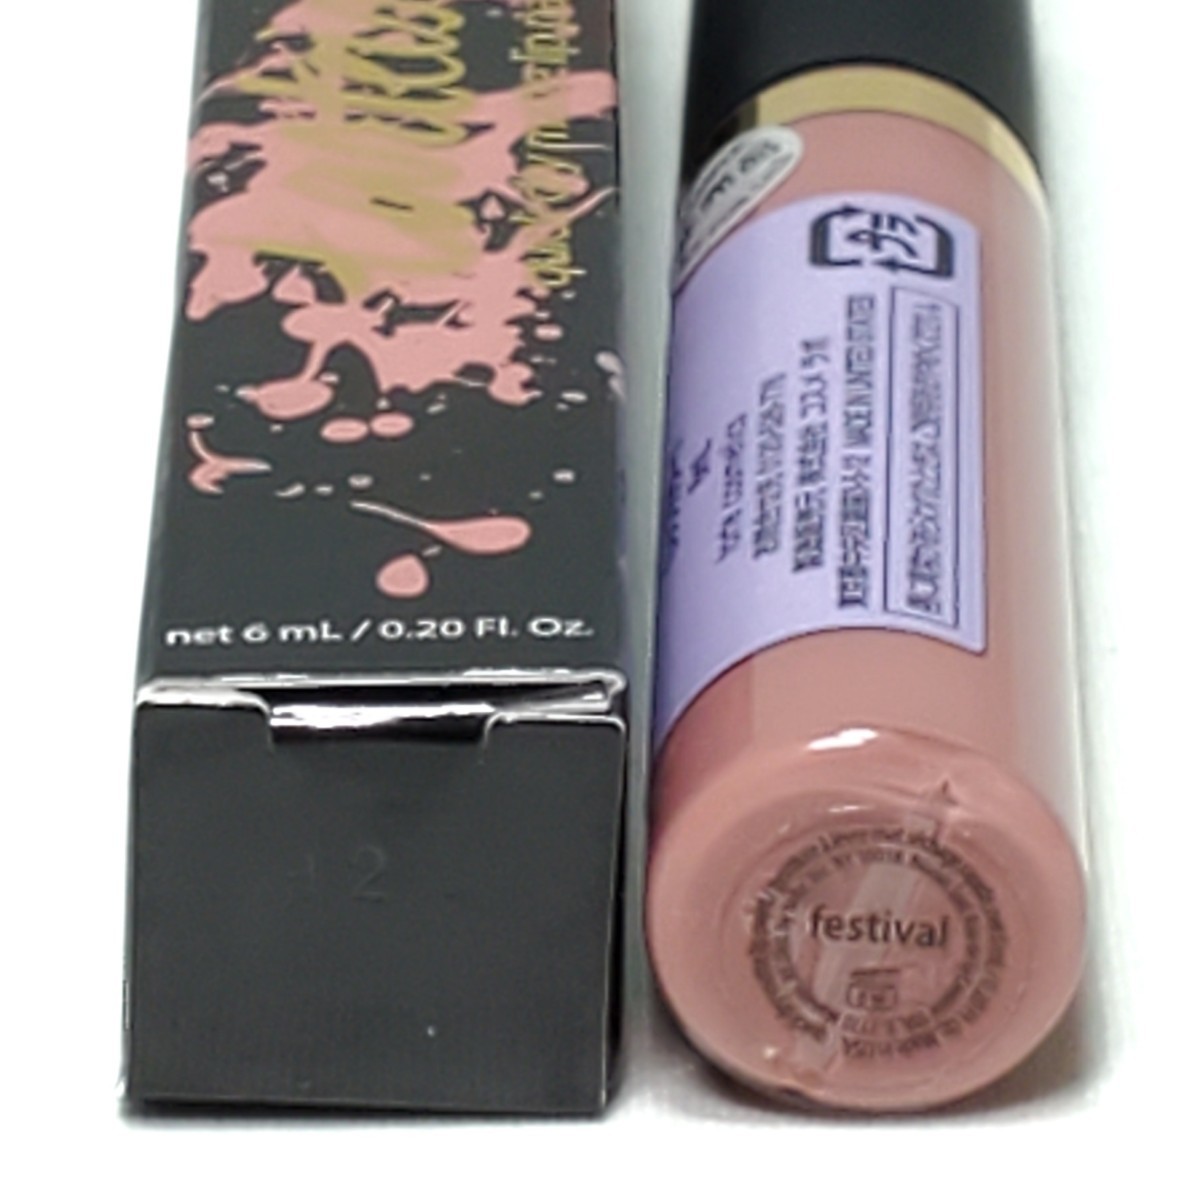 taruti -stroke Quick dry ma trip paint festival( lip color )6ml unused * sample goods 